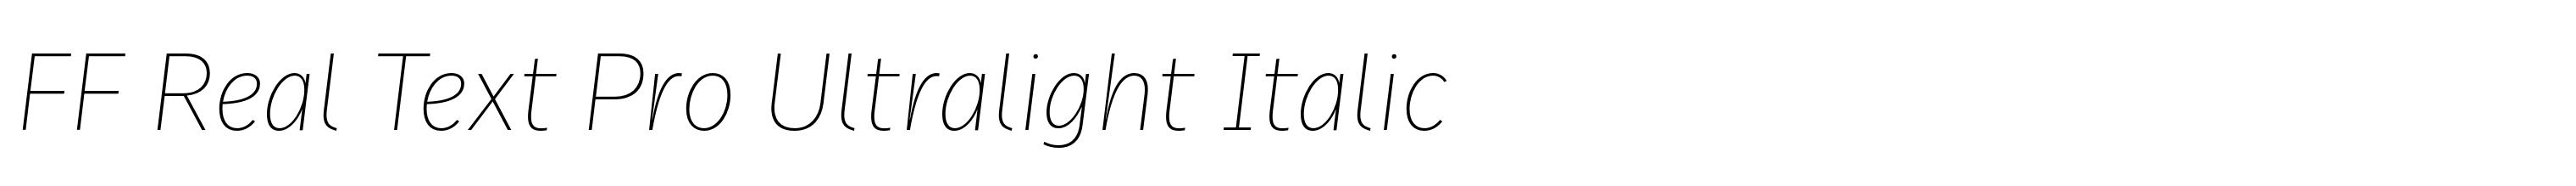 FF Real Text Pro Ultralight Italic